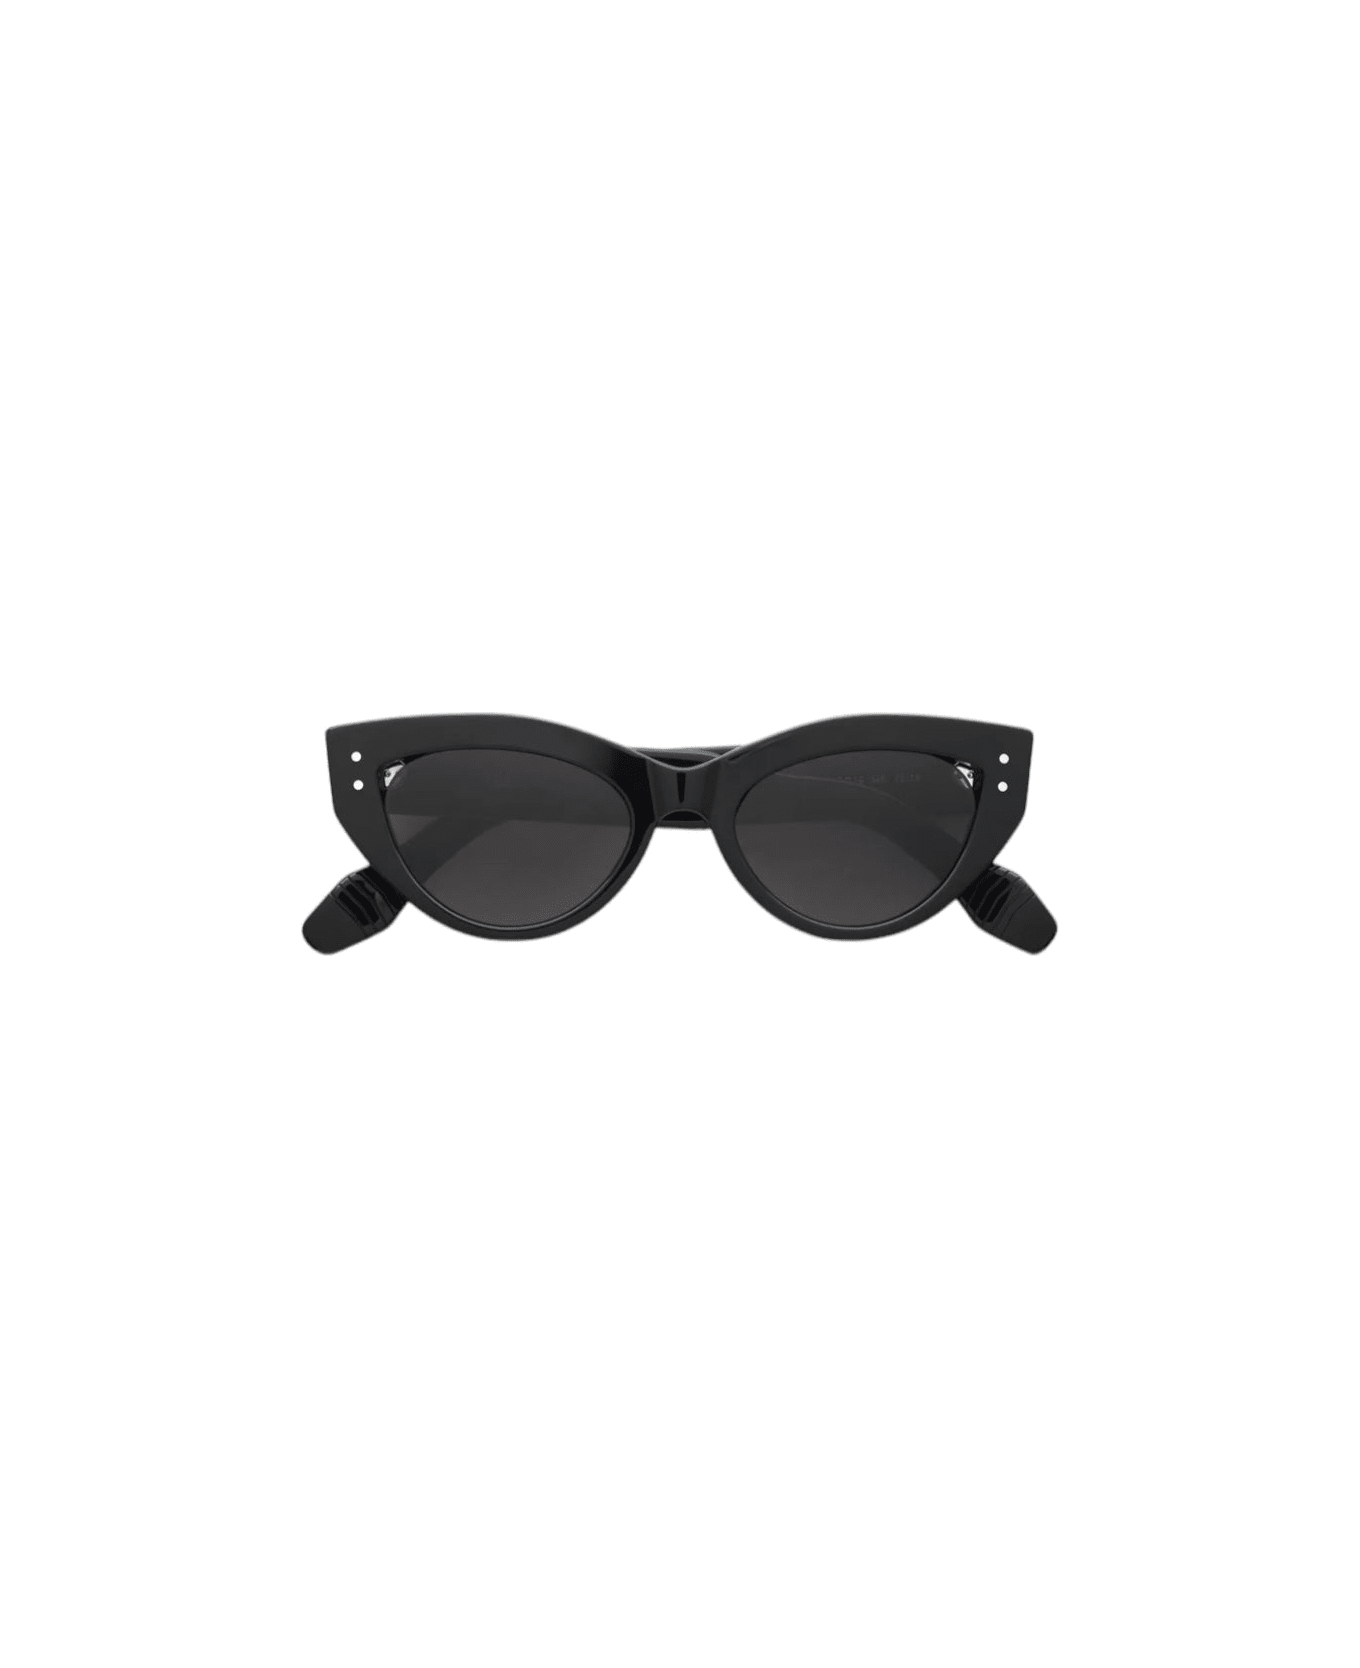 Cubitts Caledonia Sunglasses サングラス